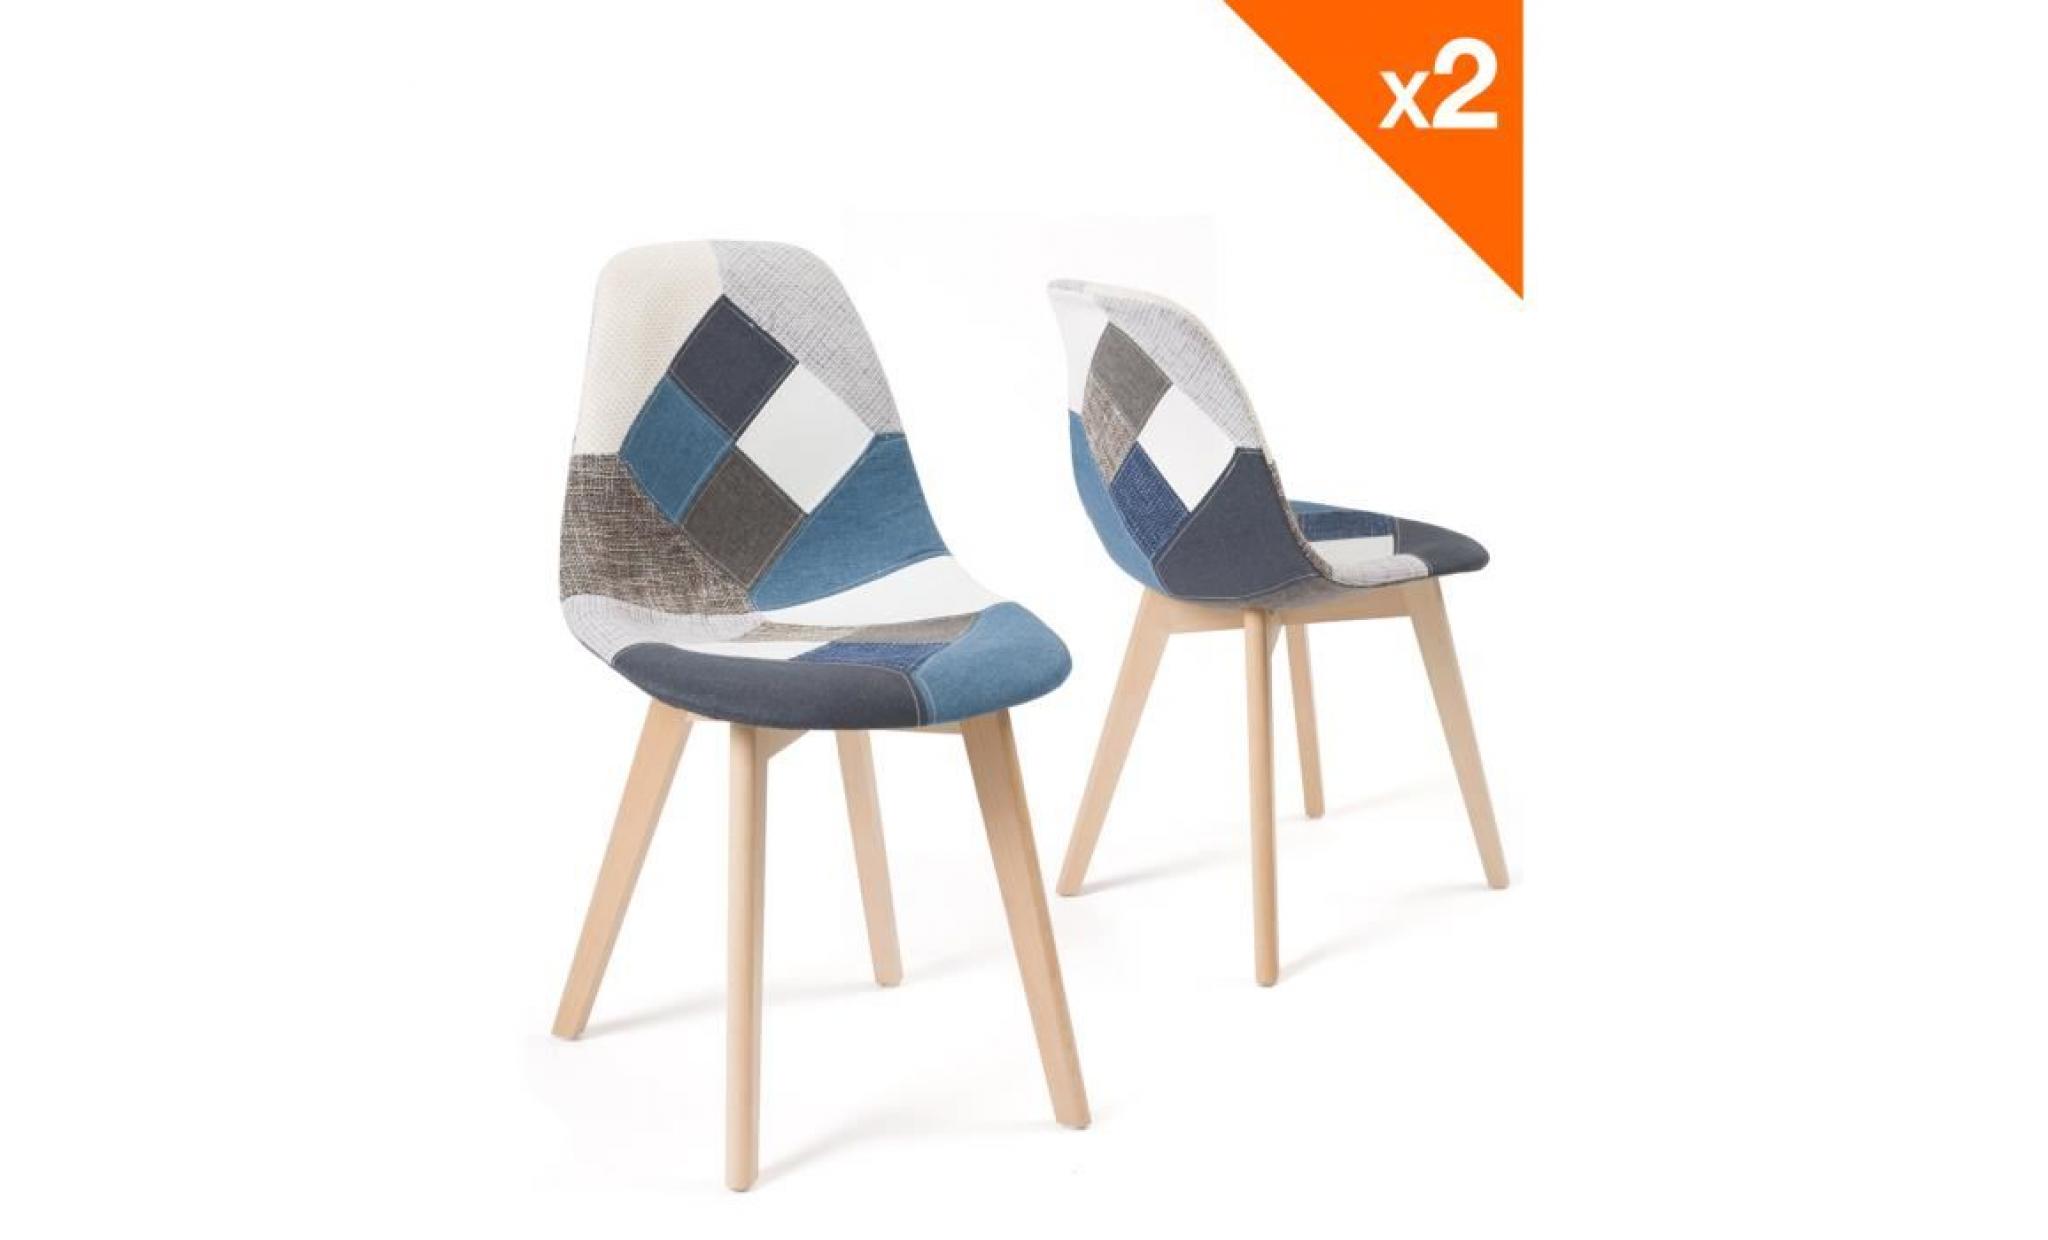 kayelles lot de 2 chaises patchwork scandinaves, salle à manger, cuisine   nada (patchwork bleu)